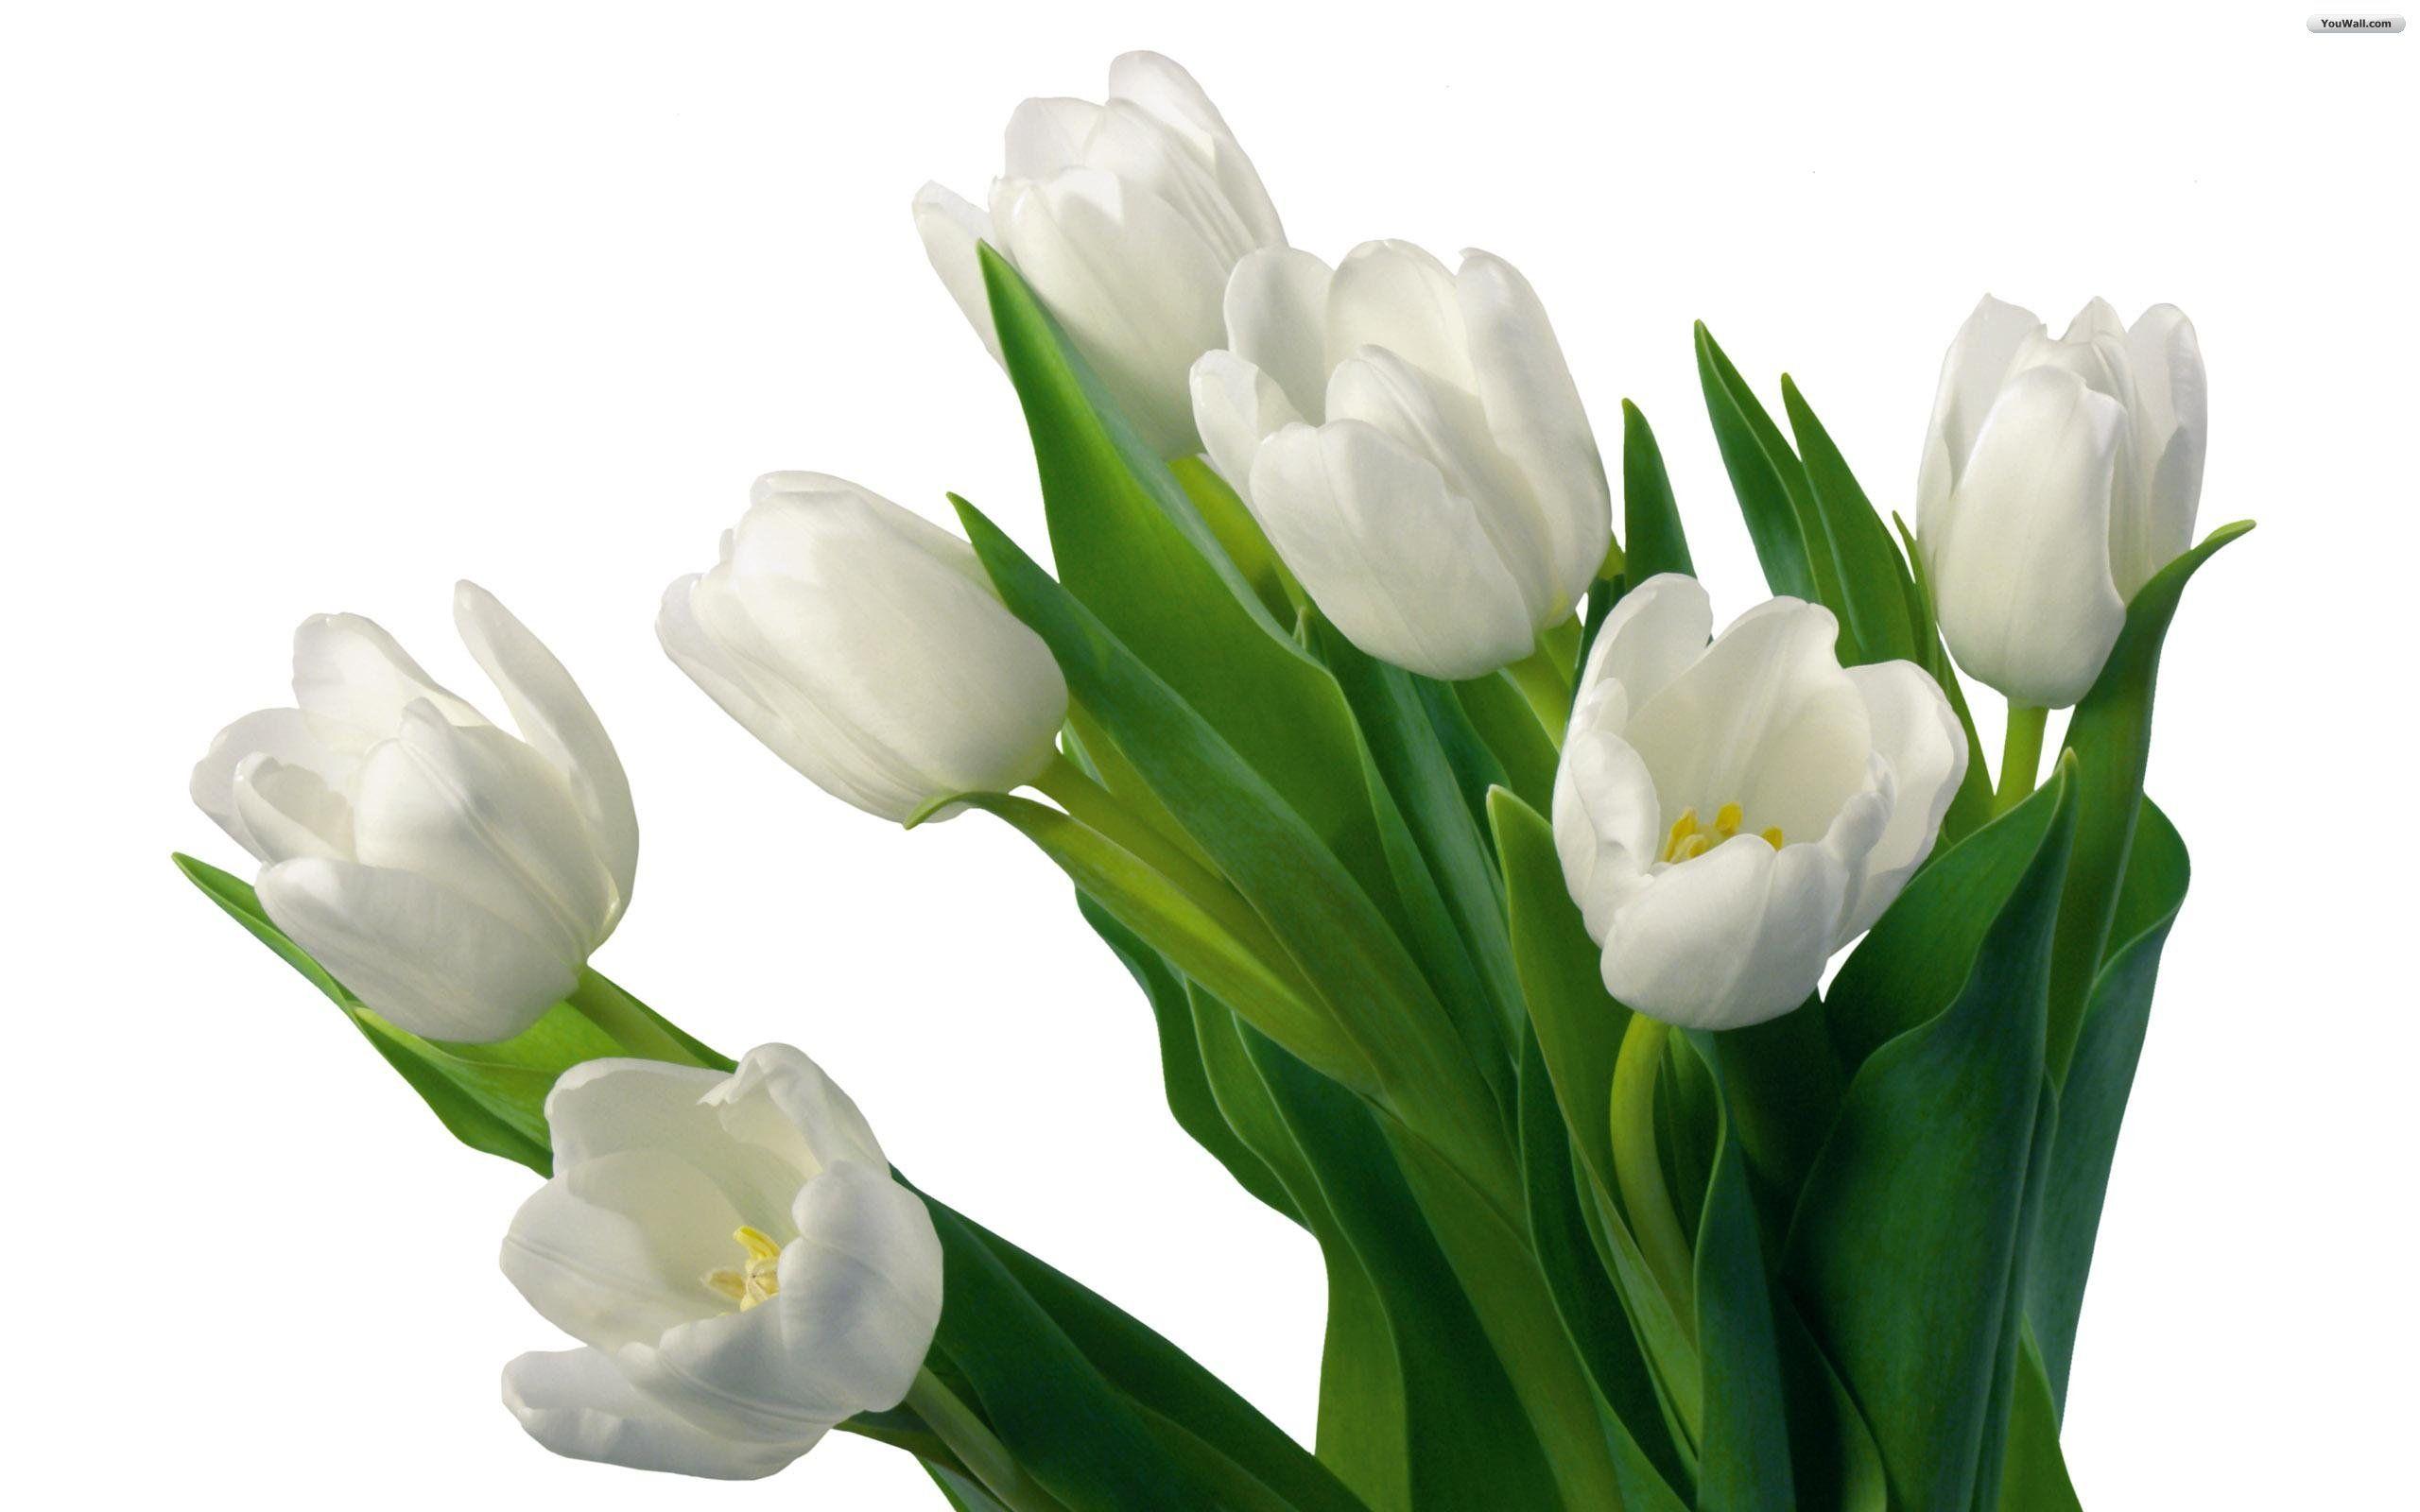 White Tulips Flower, iPhone Wallpaper, Facebook Cover, Twitter